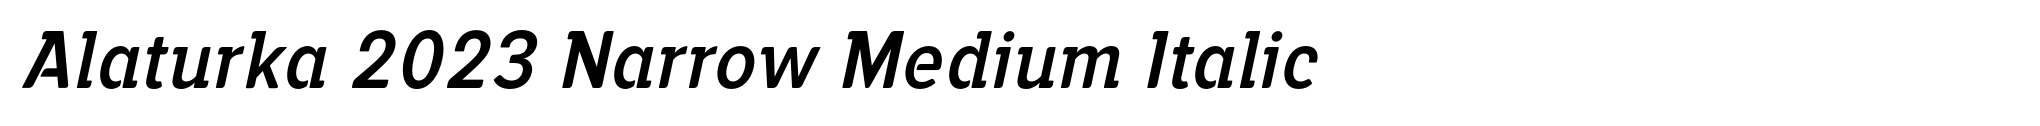 Alaturka 2023 Narrow Medium Italic image